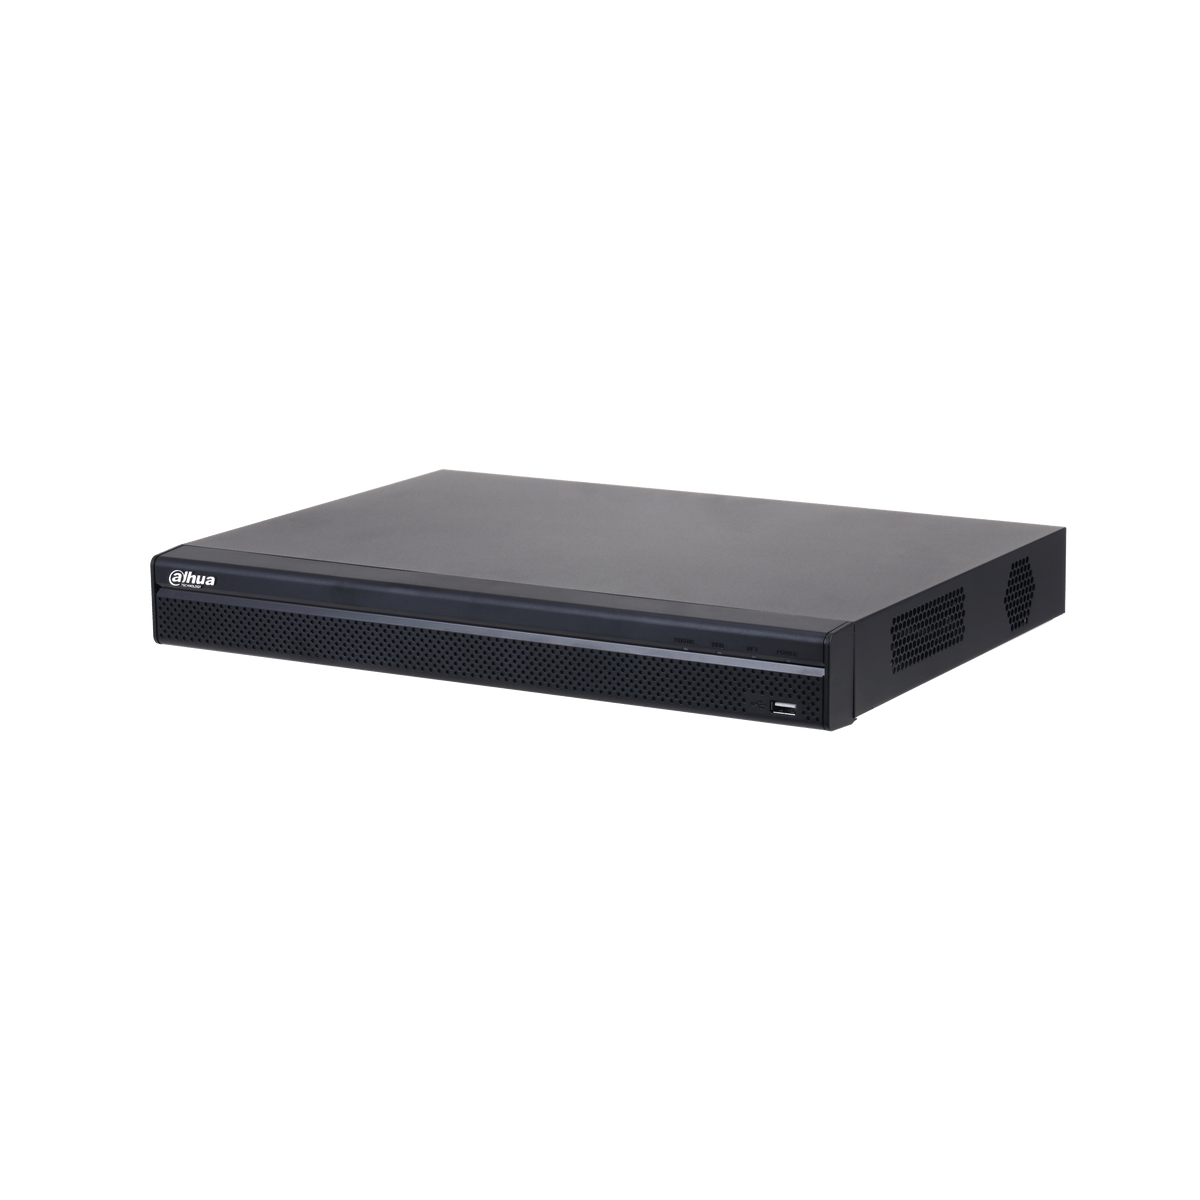 DAHUA NVR4204-P-4KS2/L 4 Channel 1U 2HDDs 4PoE Network Video Recorder